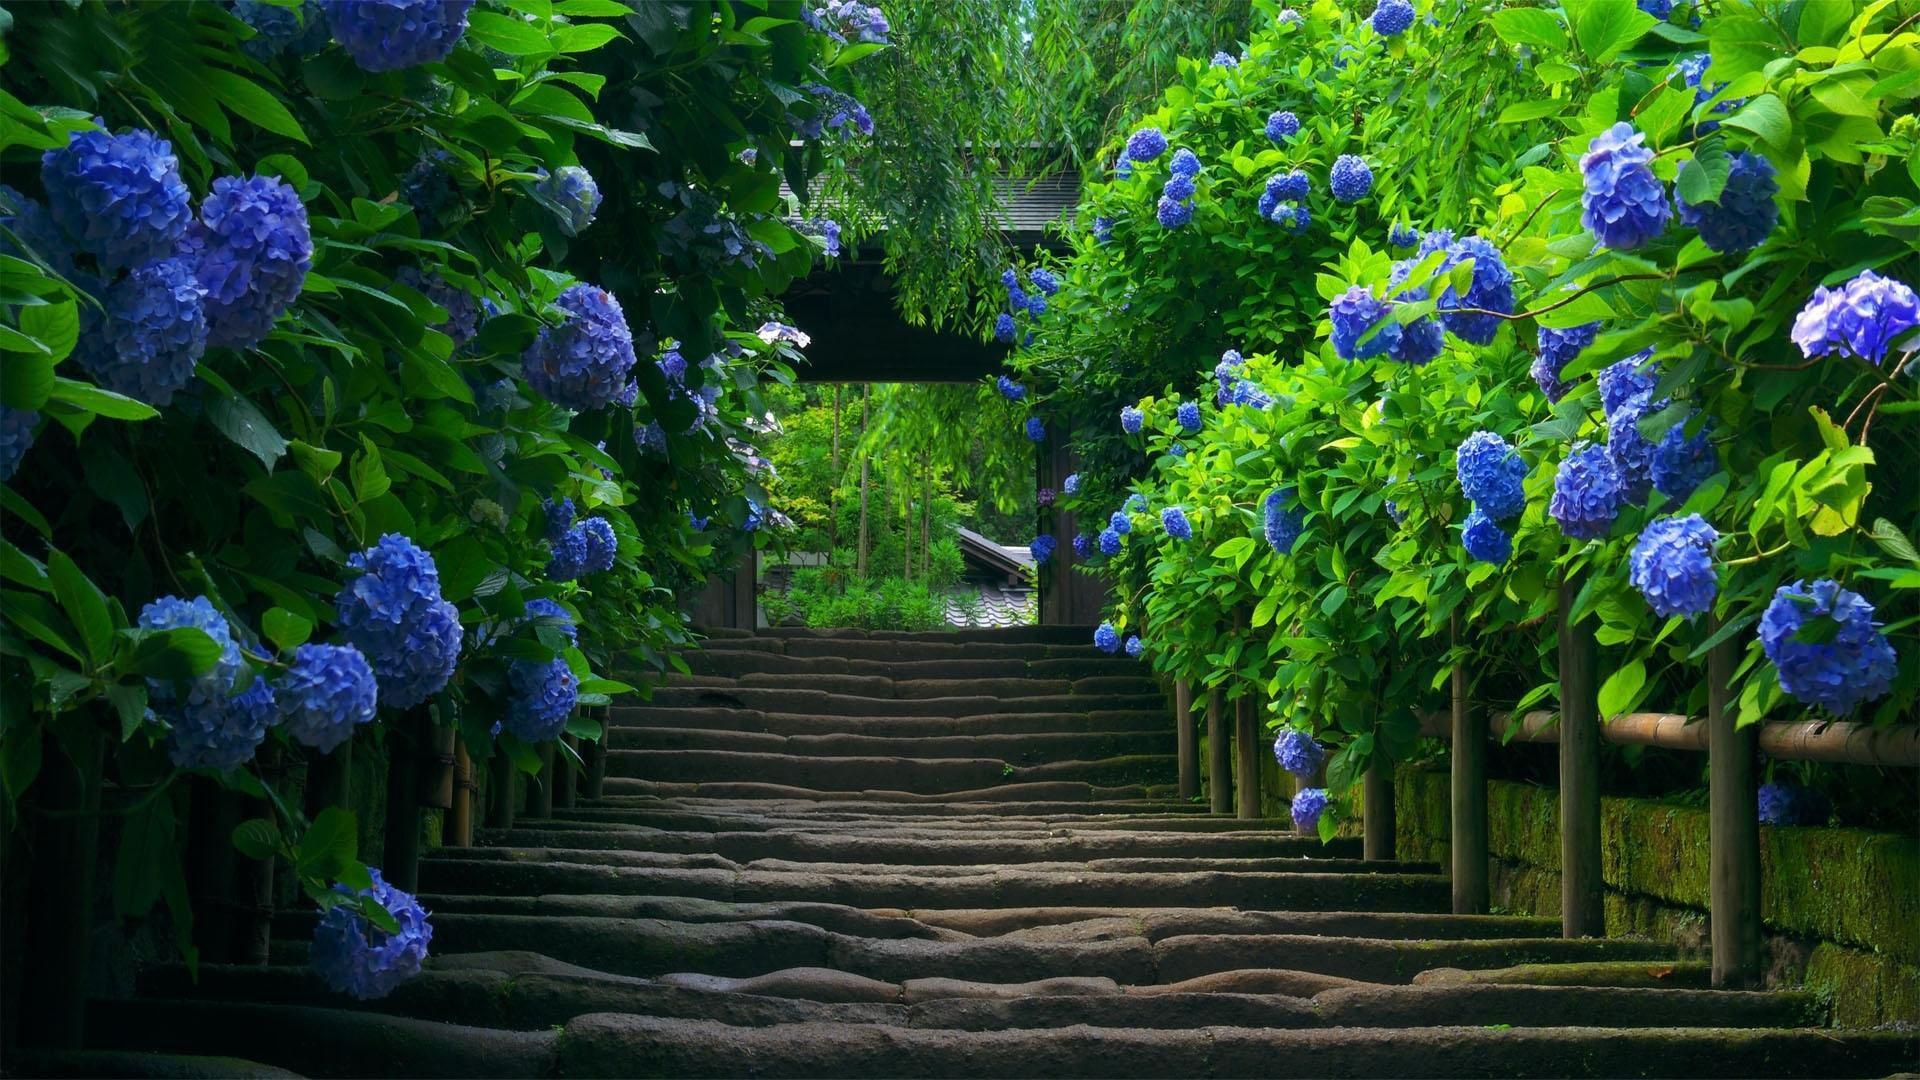 Blue Hydgendra. Secret garden. Beautiful nature wallpaper